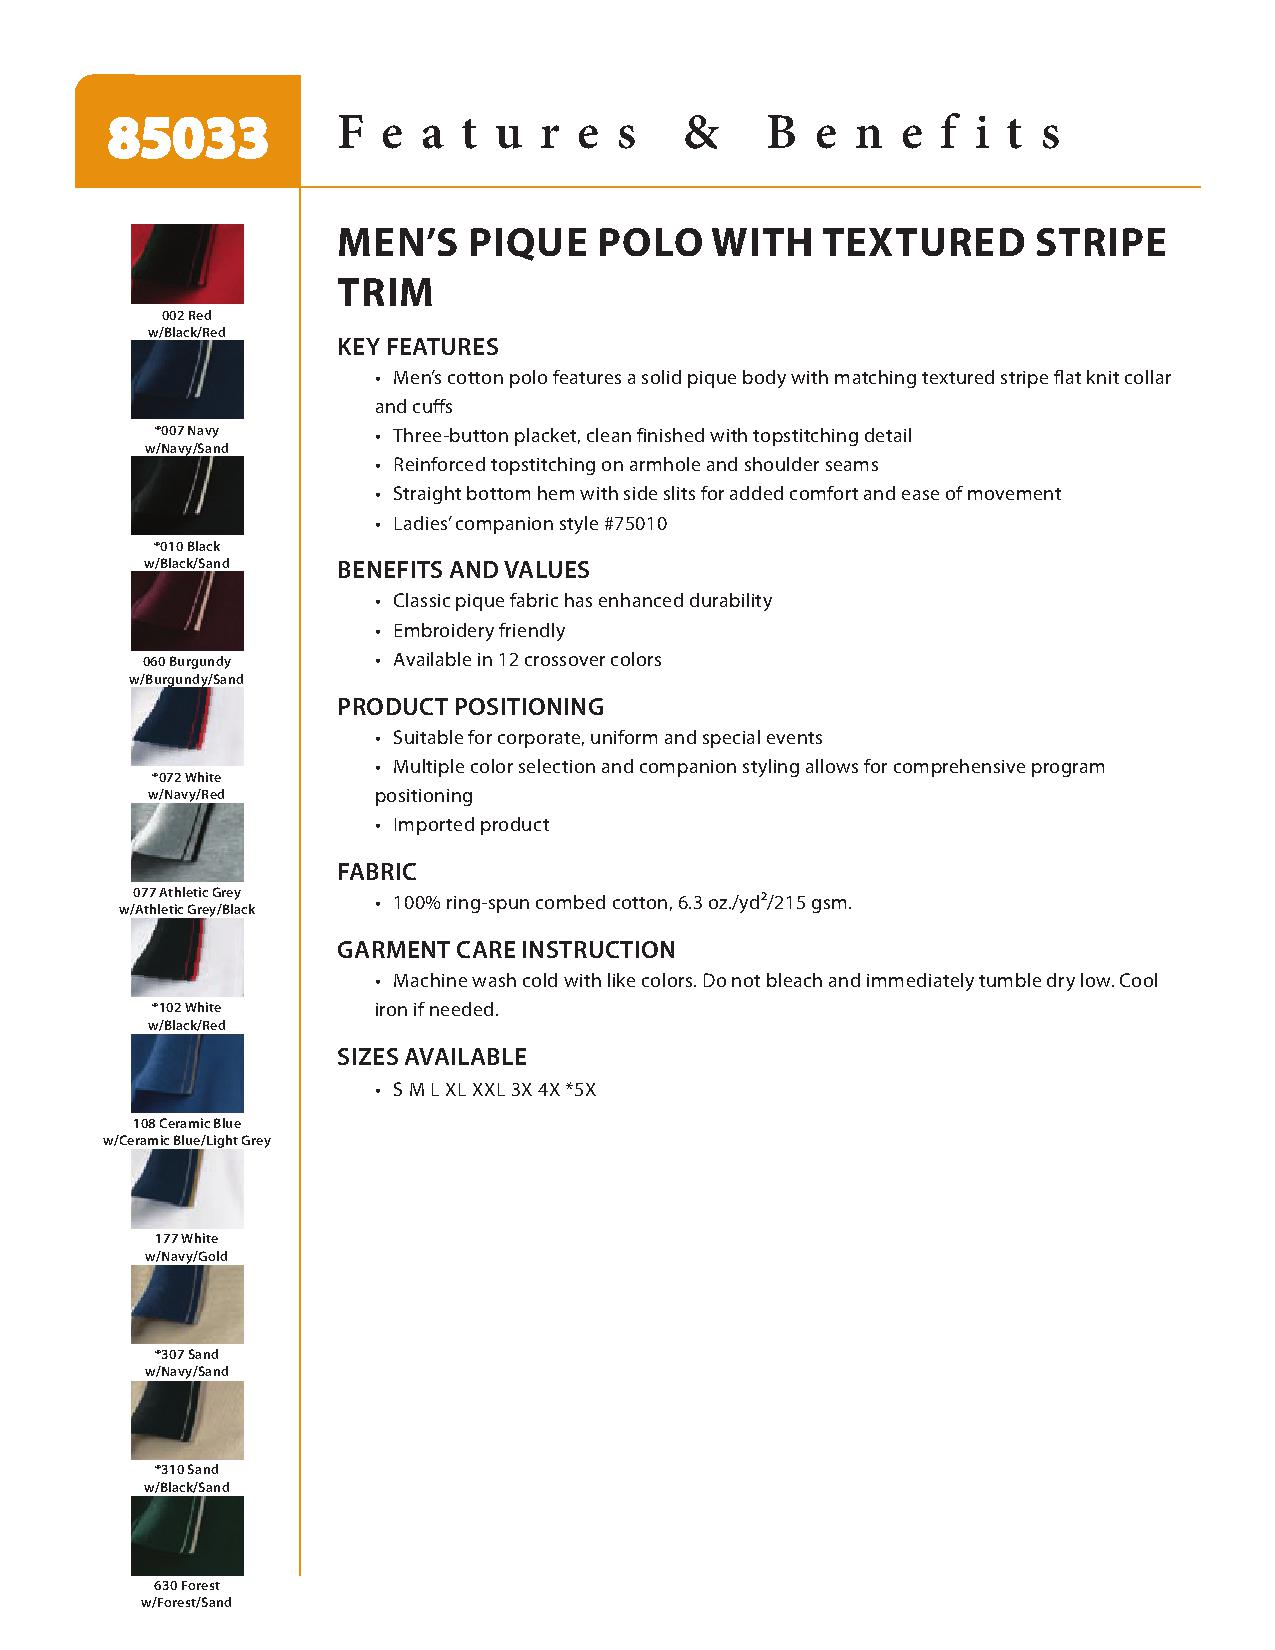 Ash City Pique 85033 - Men's Pique Polo With Textured Stripe Trim